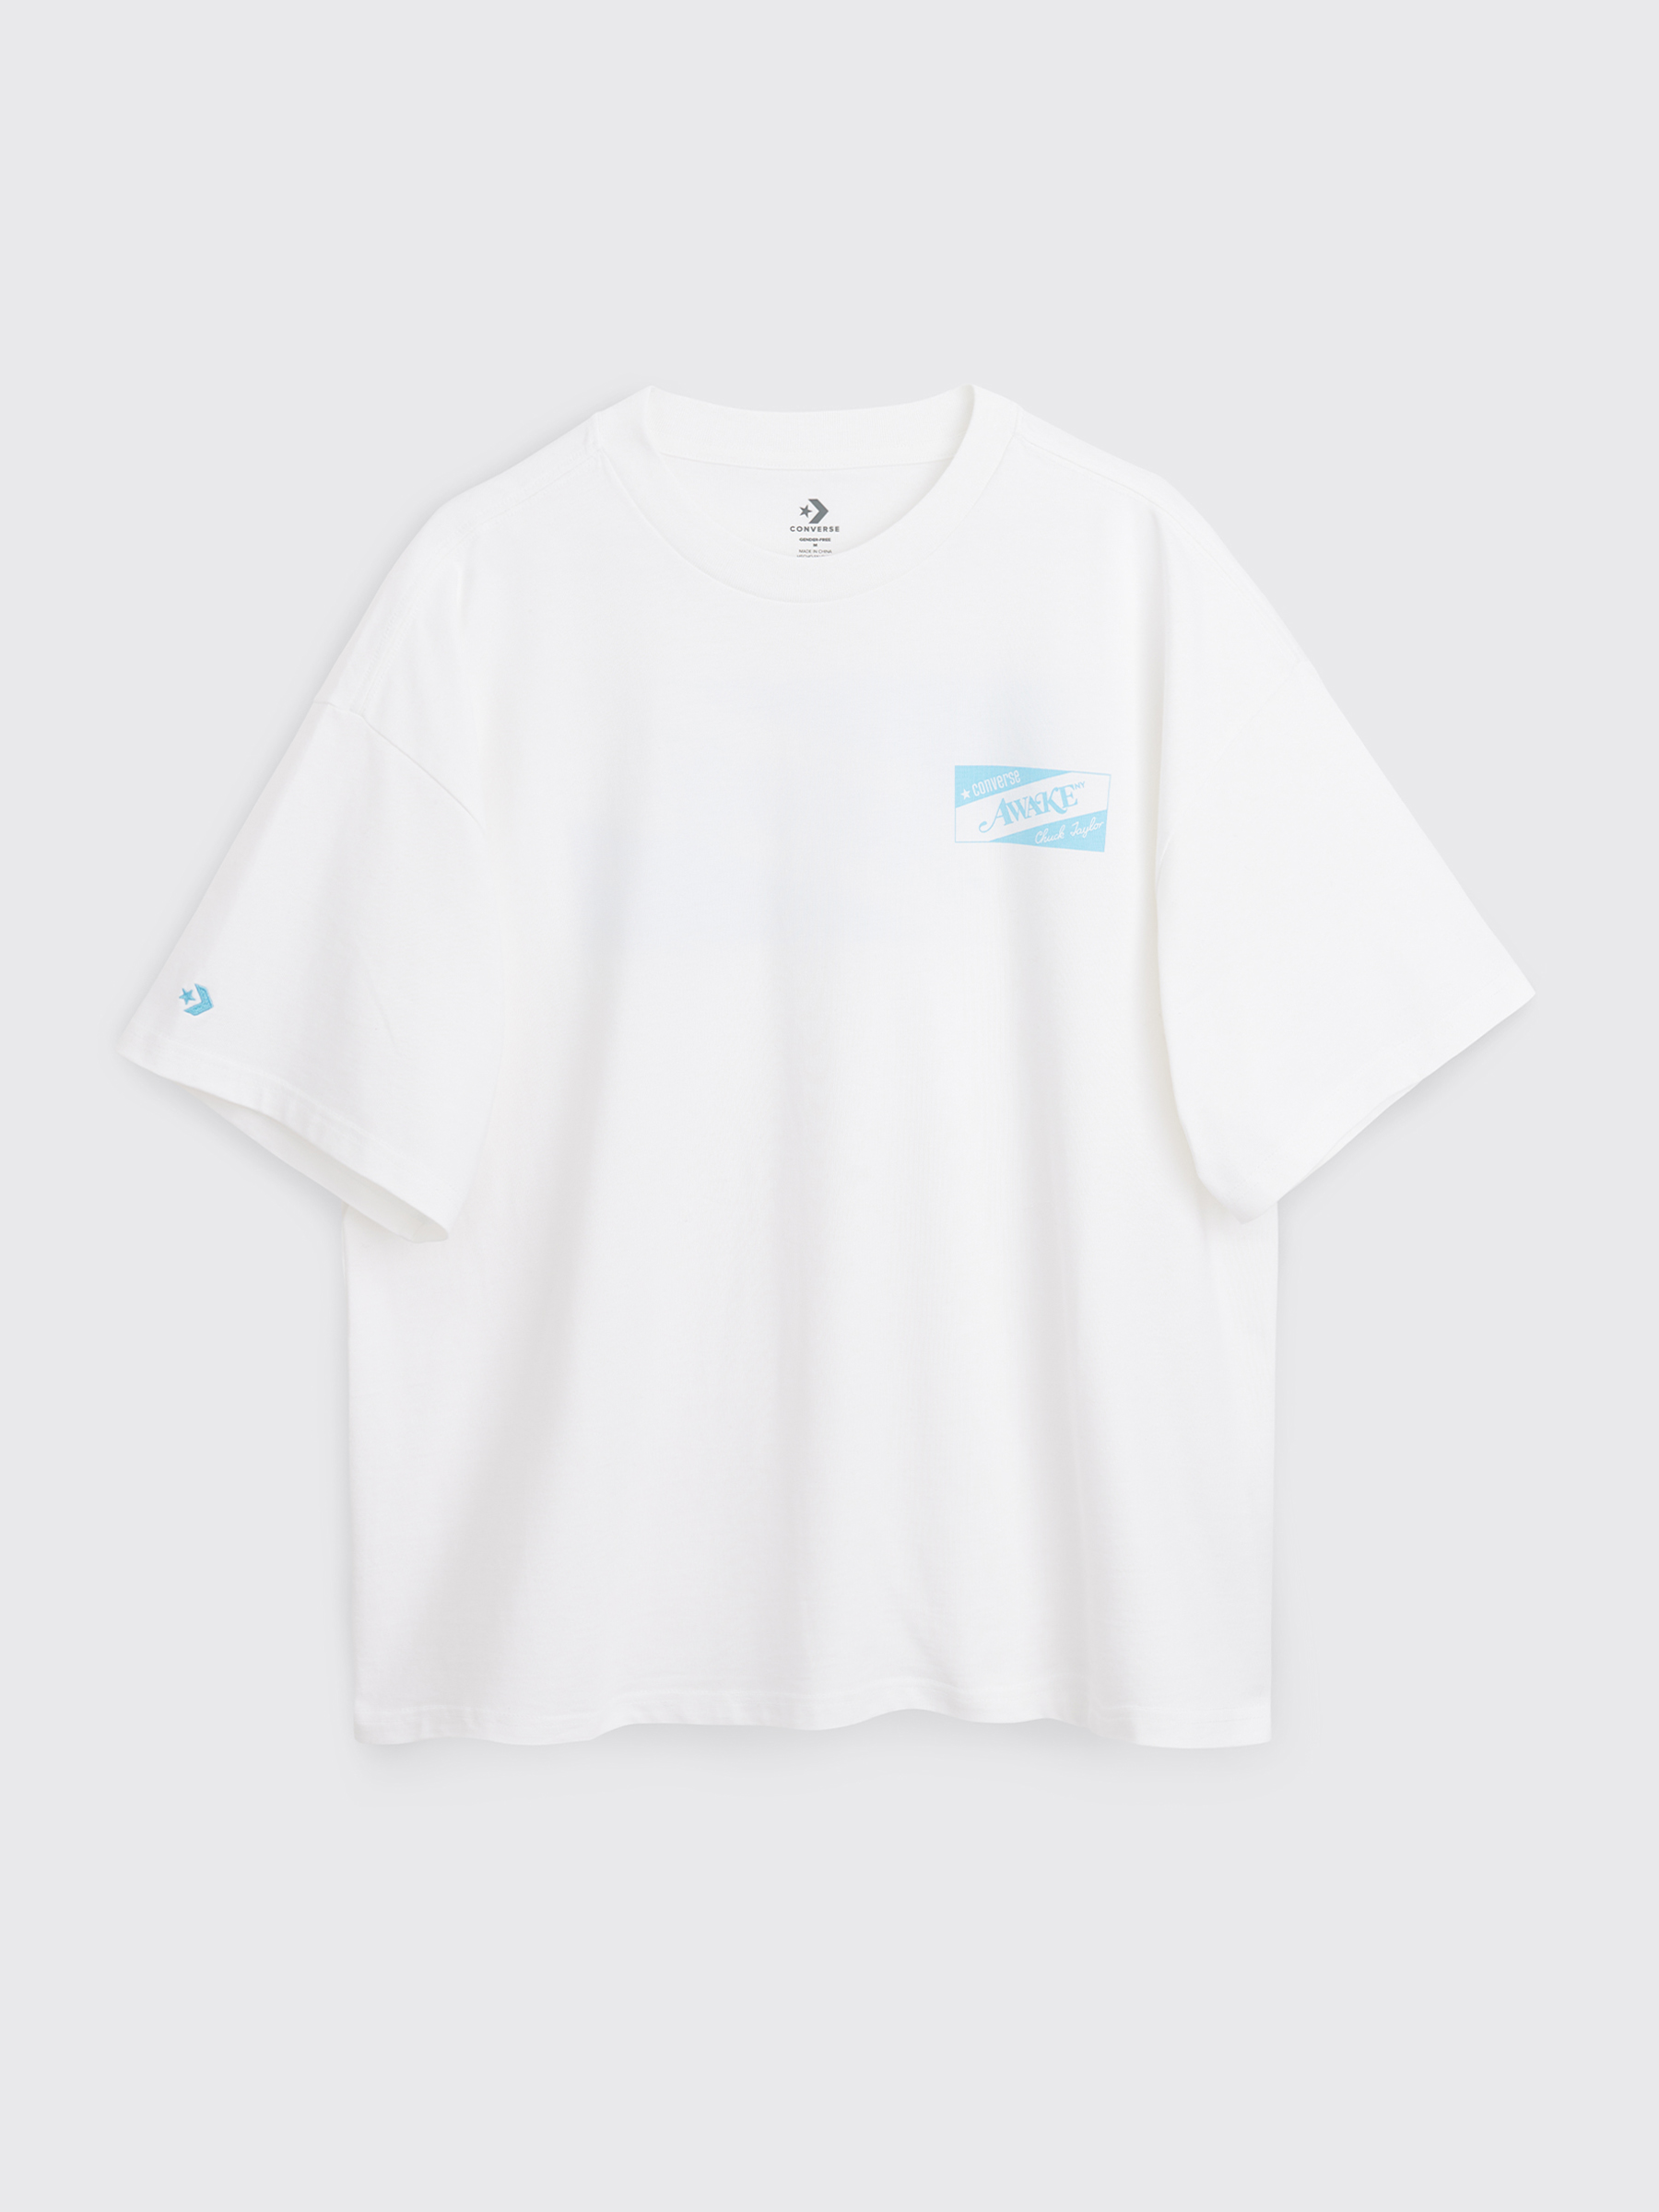 Bien NY T-shirt Logo White Awake - Converse x Très